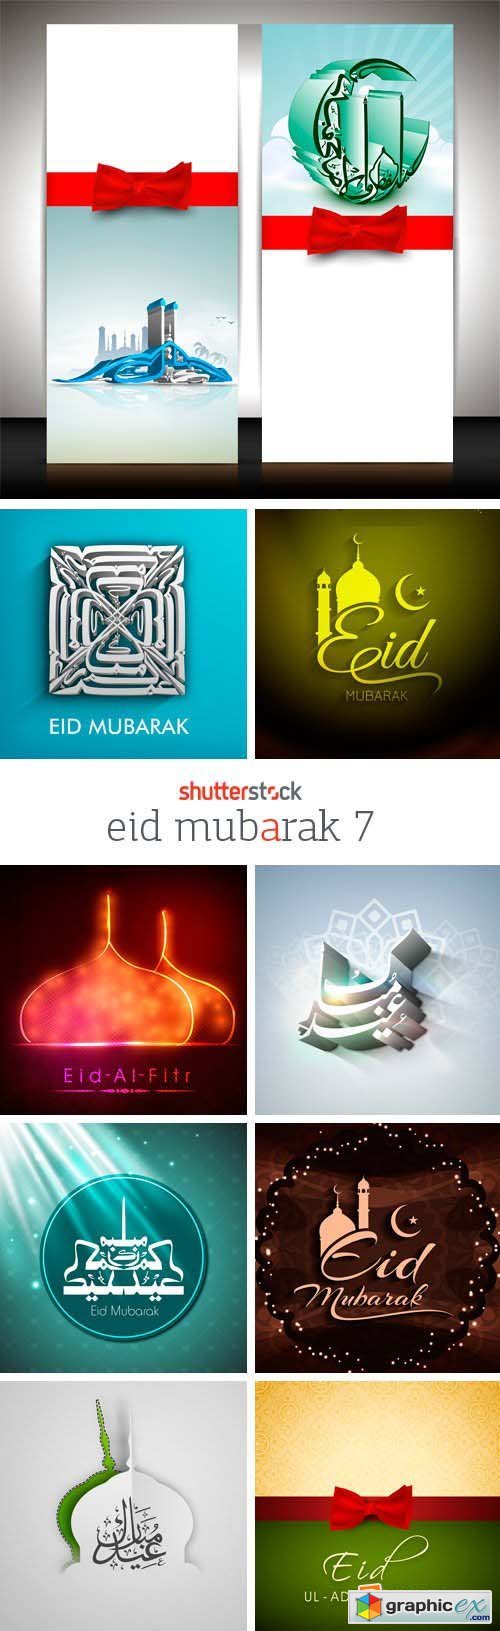 Amazing SS - Eid Mubarak 7, 25xEPS